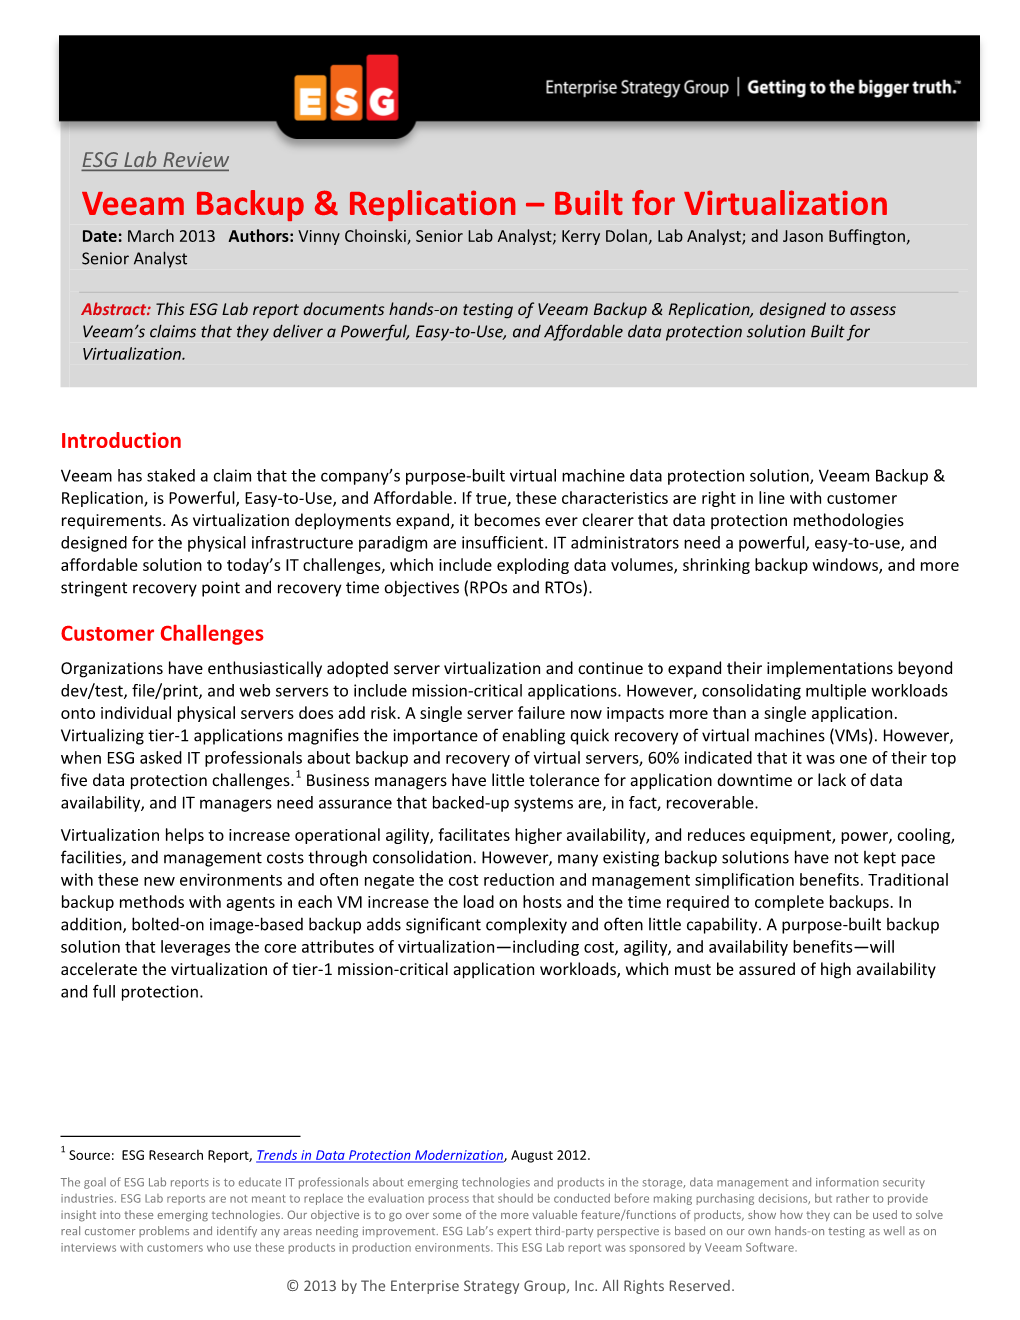 Veeam Backup & Replication – Built for Virtualization